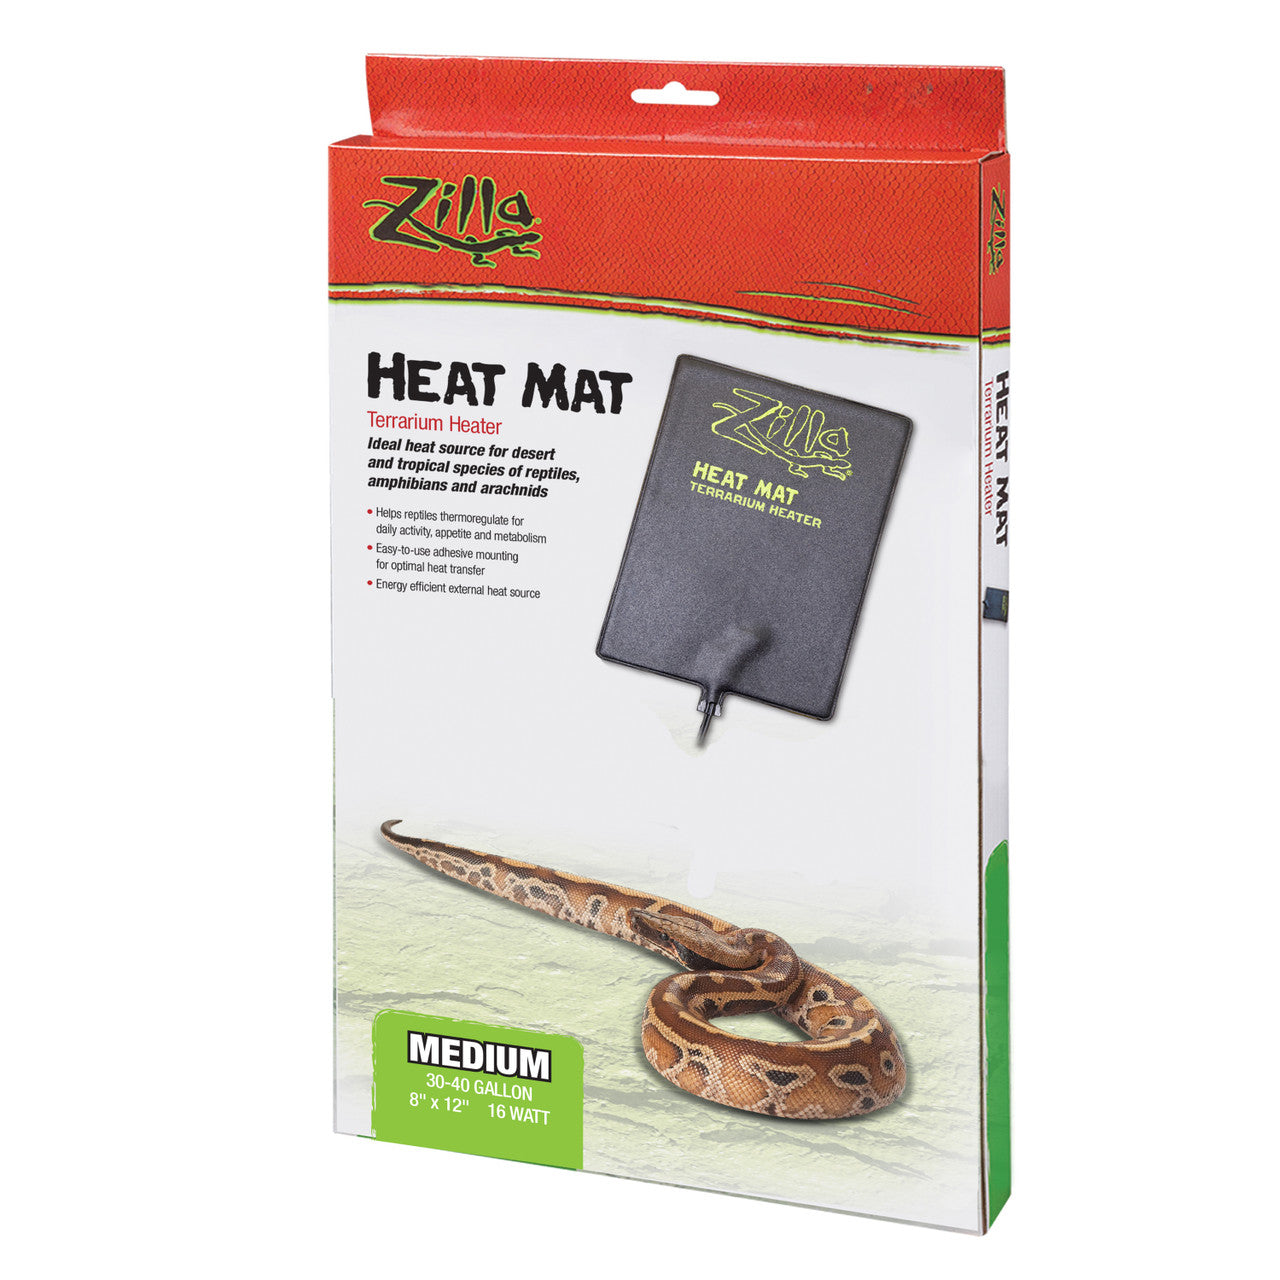 Zilla Terrarium Heat Mats Black Medium, 30-40 Gallon, 16 Watt